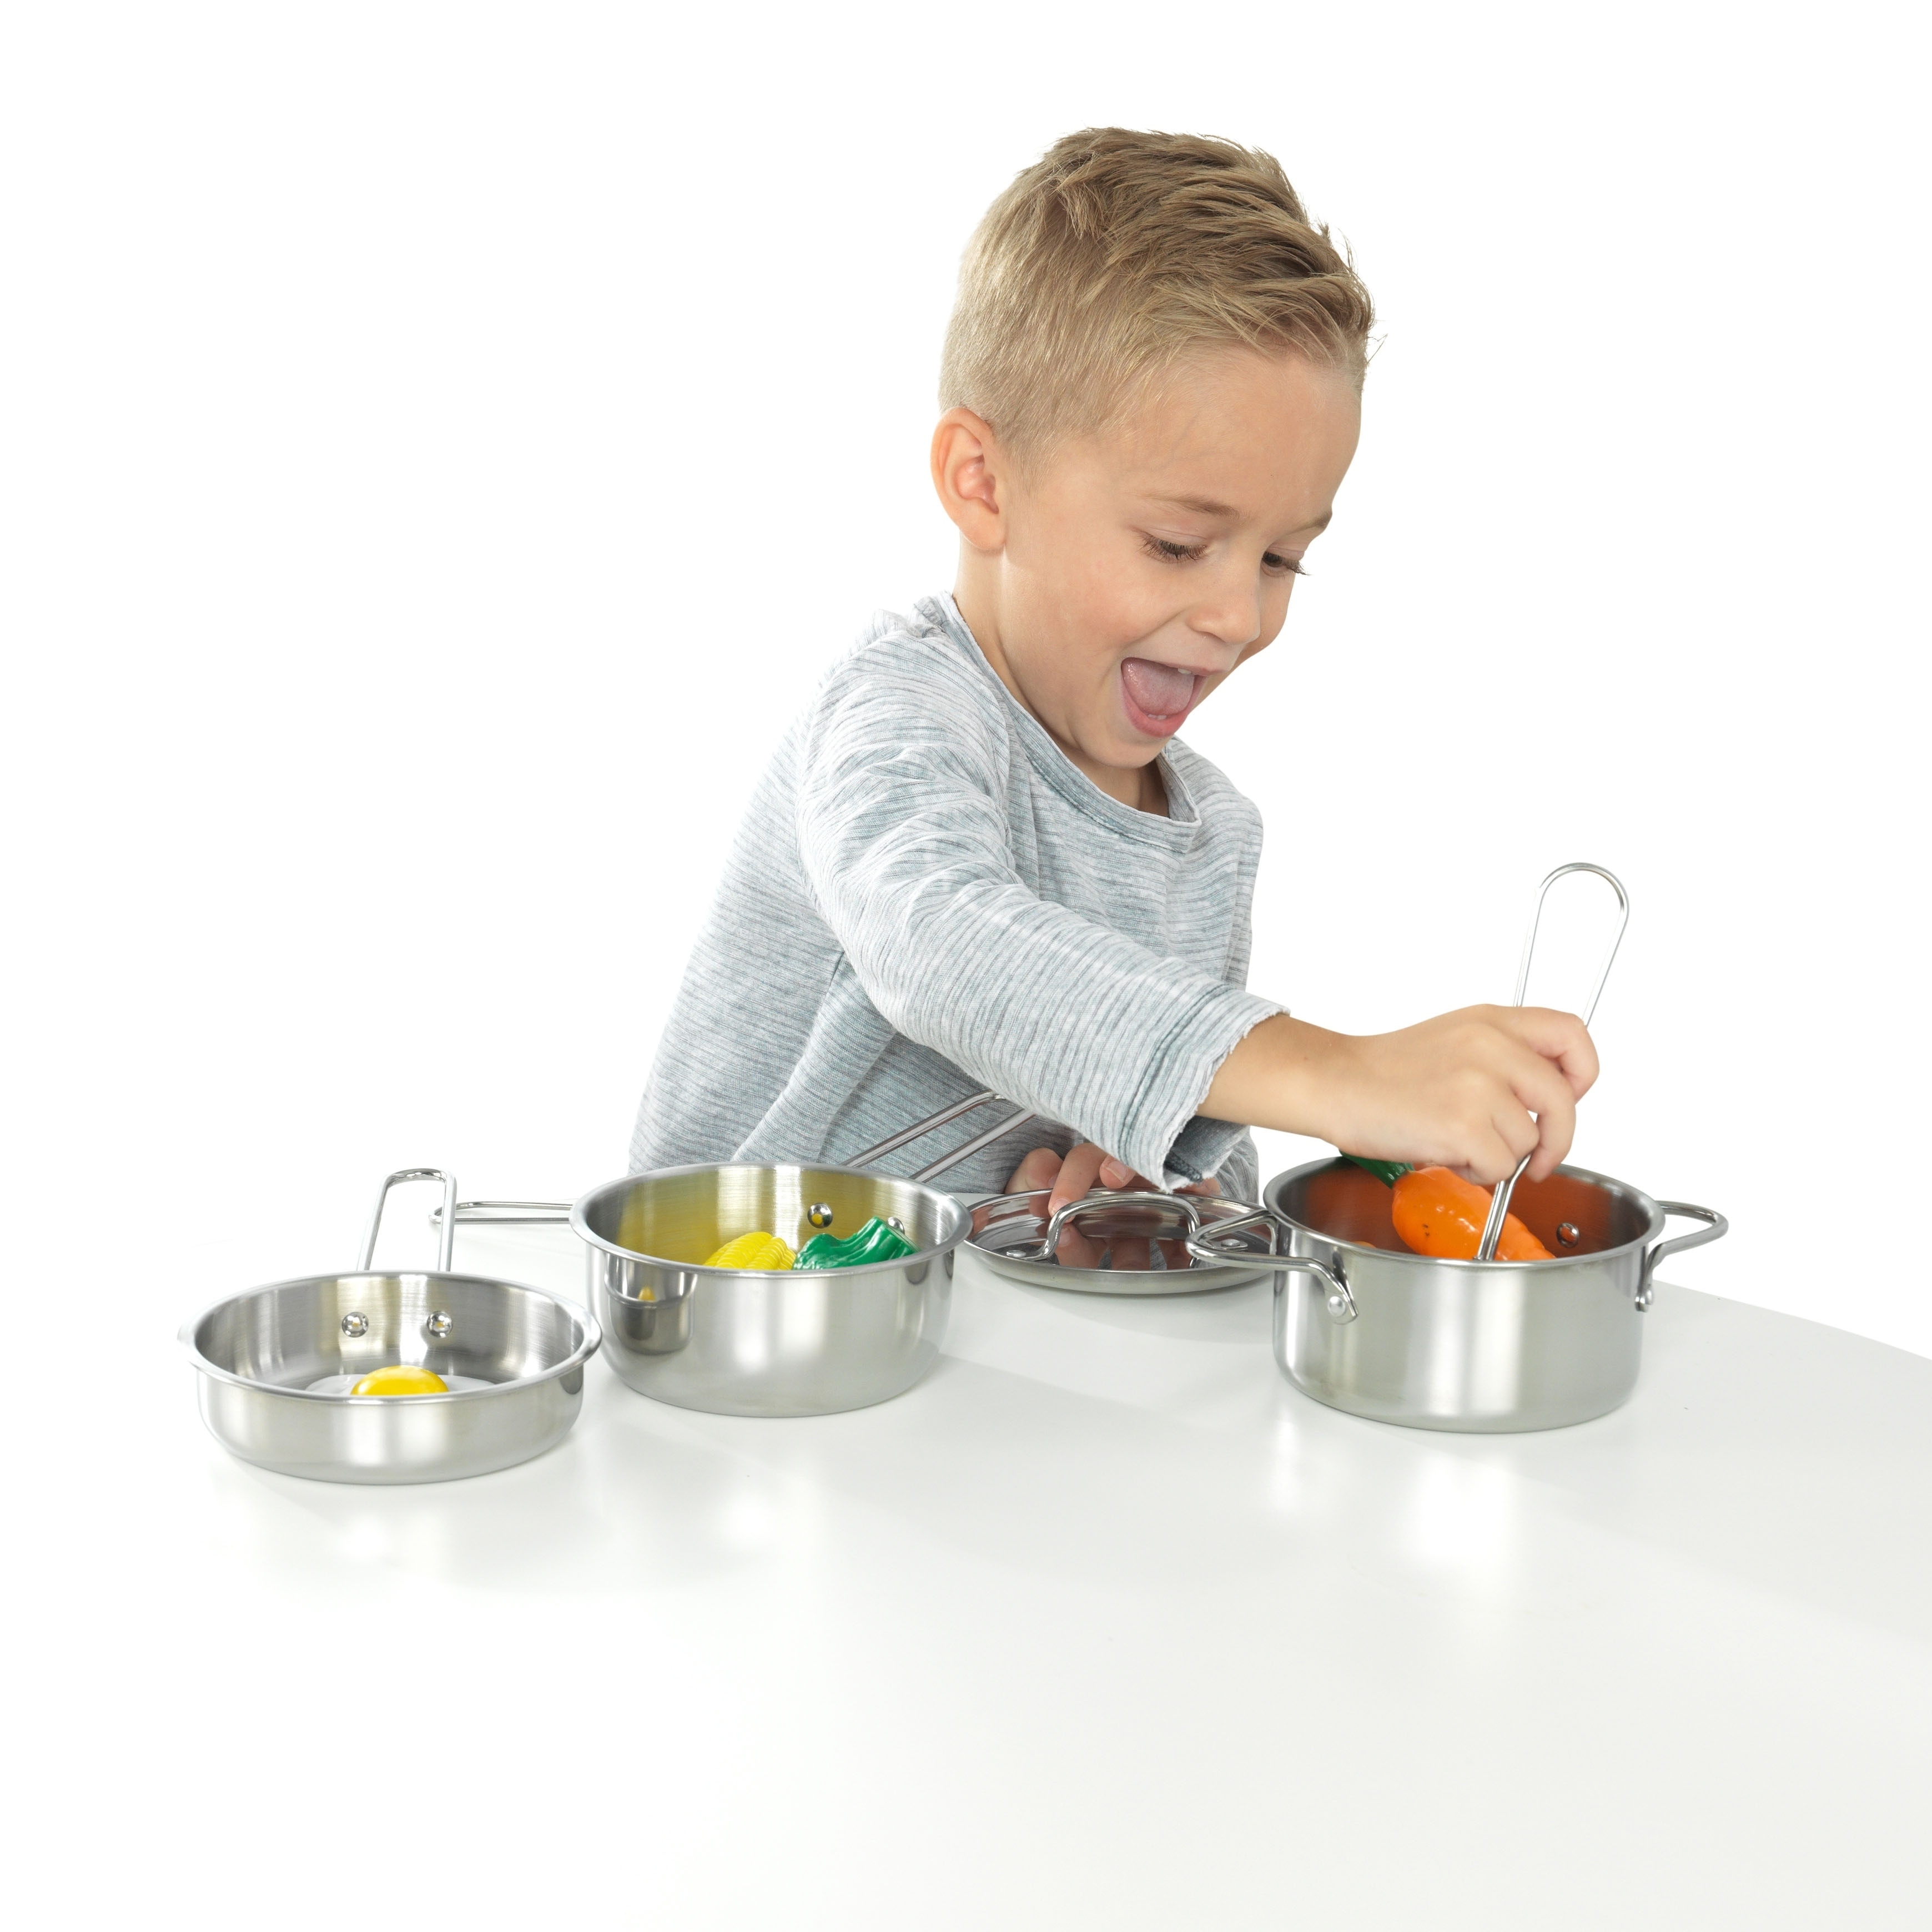 Kidkraft Deluxe Cookware Set 11pcs Toy Kitchen Sets for sale online